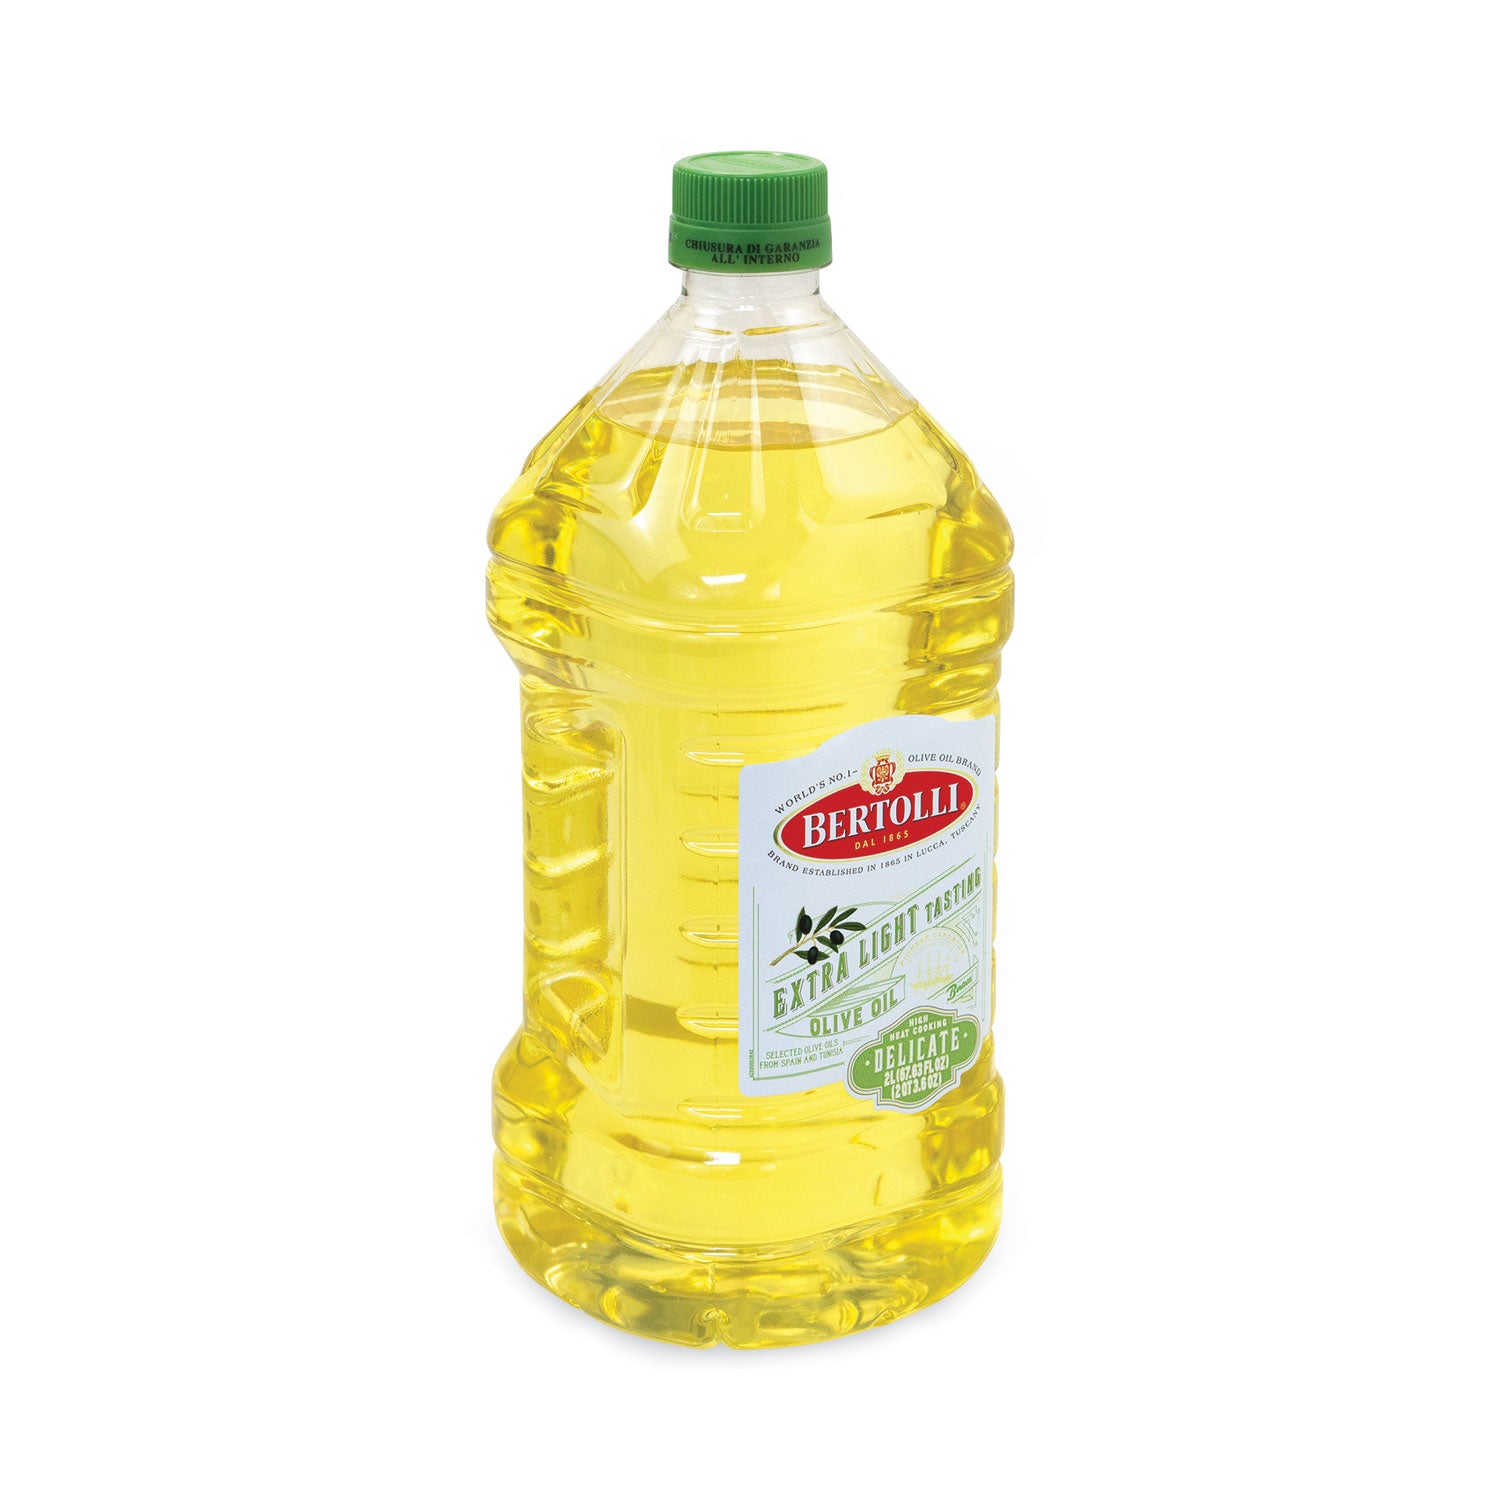 extra-light-tasting-olive-oil-2-l-bottle-ships-in-1-3-business-days_grr22000804 - 2